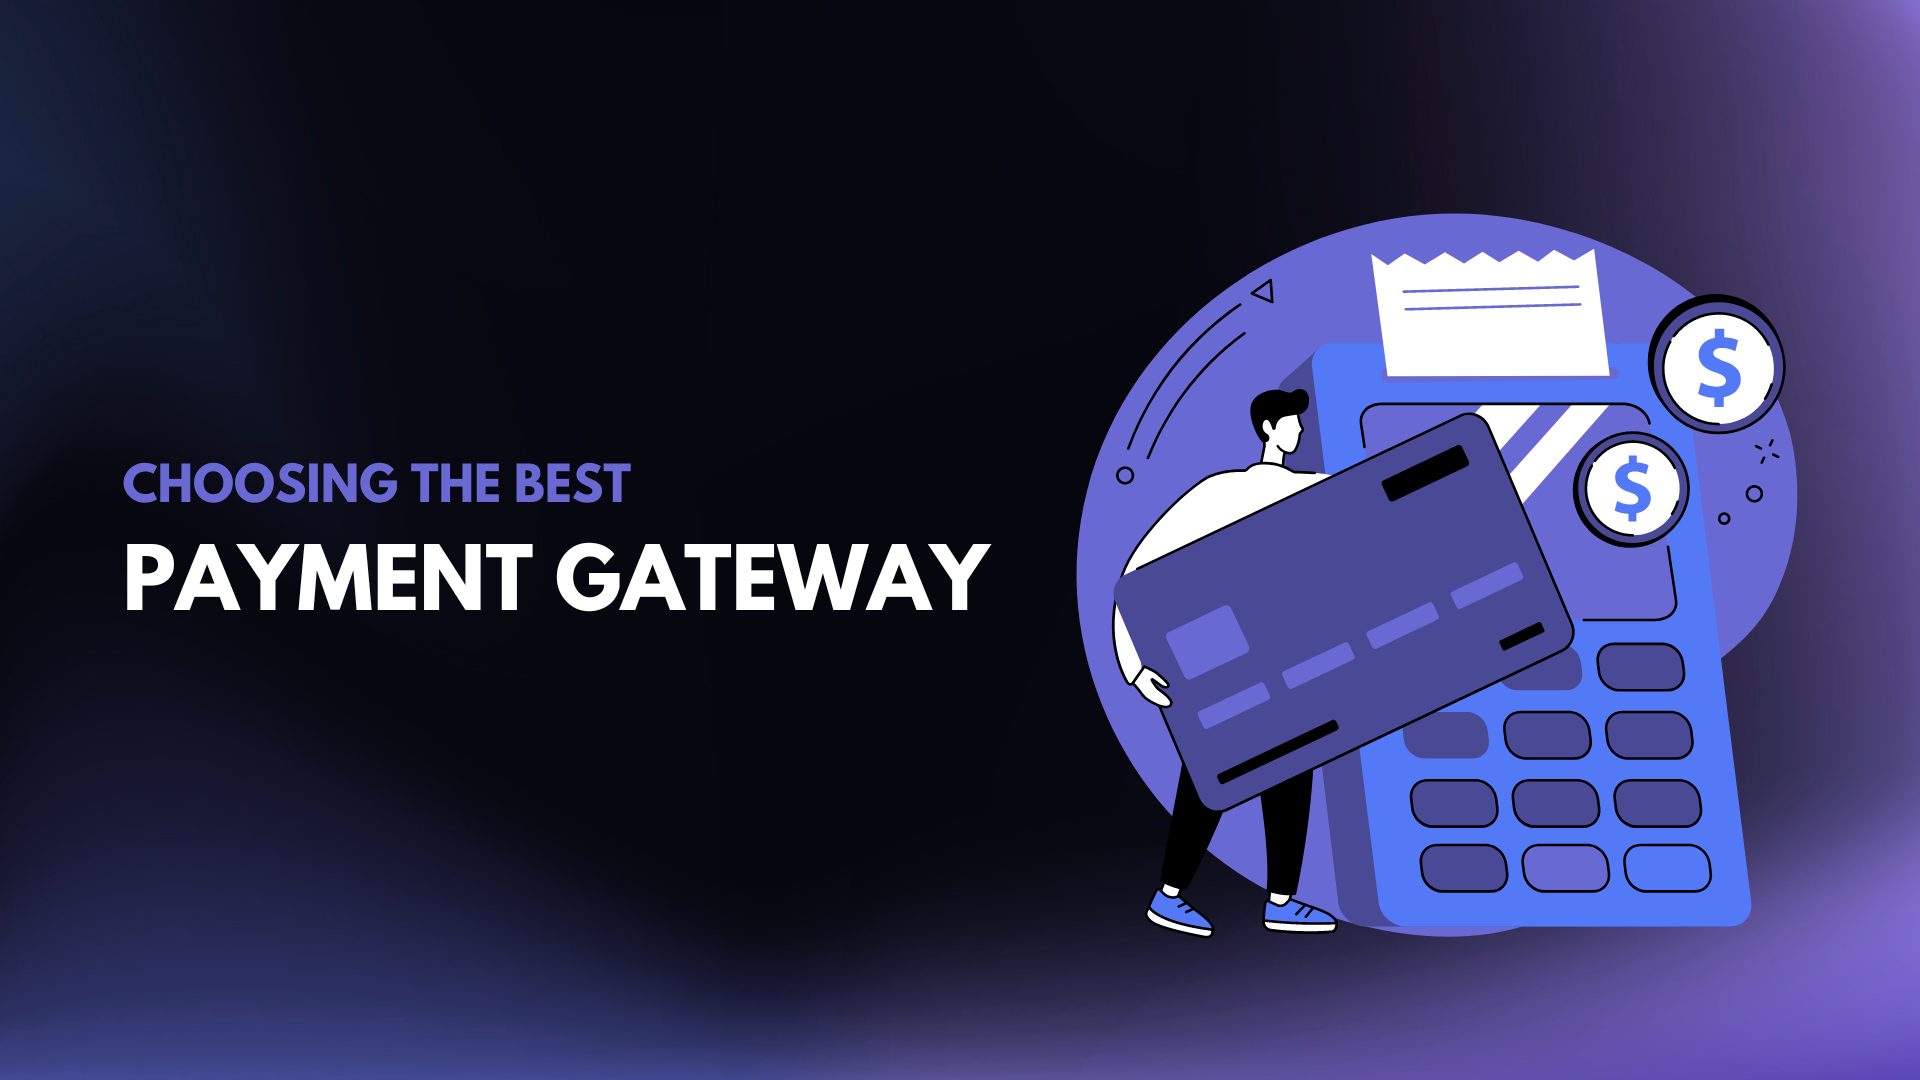 payment gateway